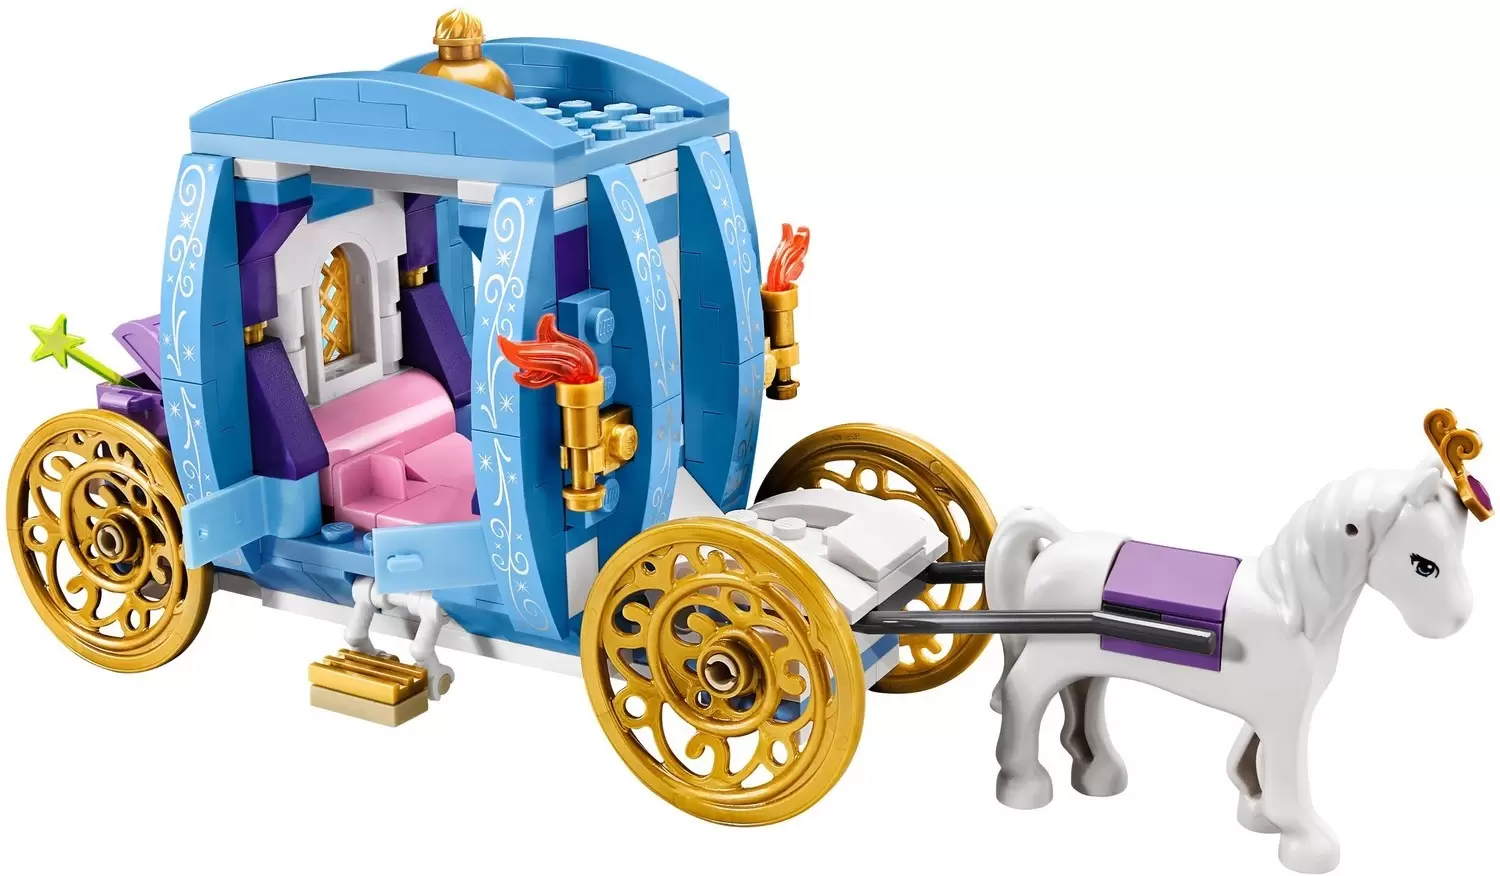 Smøre præst Transplant Cinderella's Dream Carriage - LEGO Disney set 41053